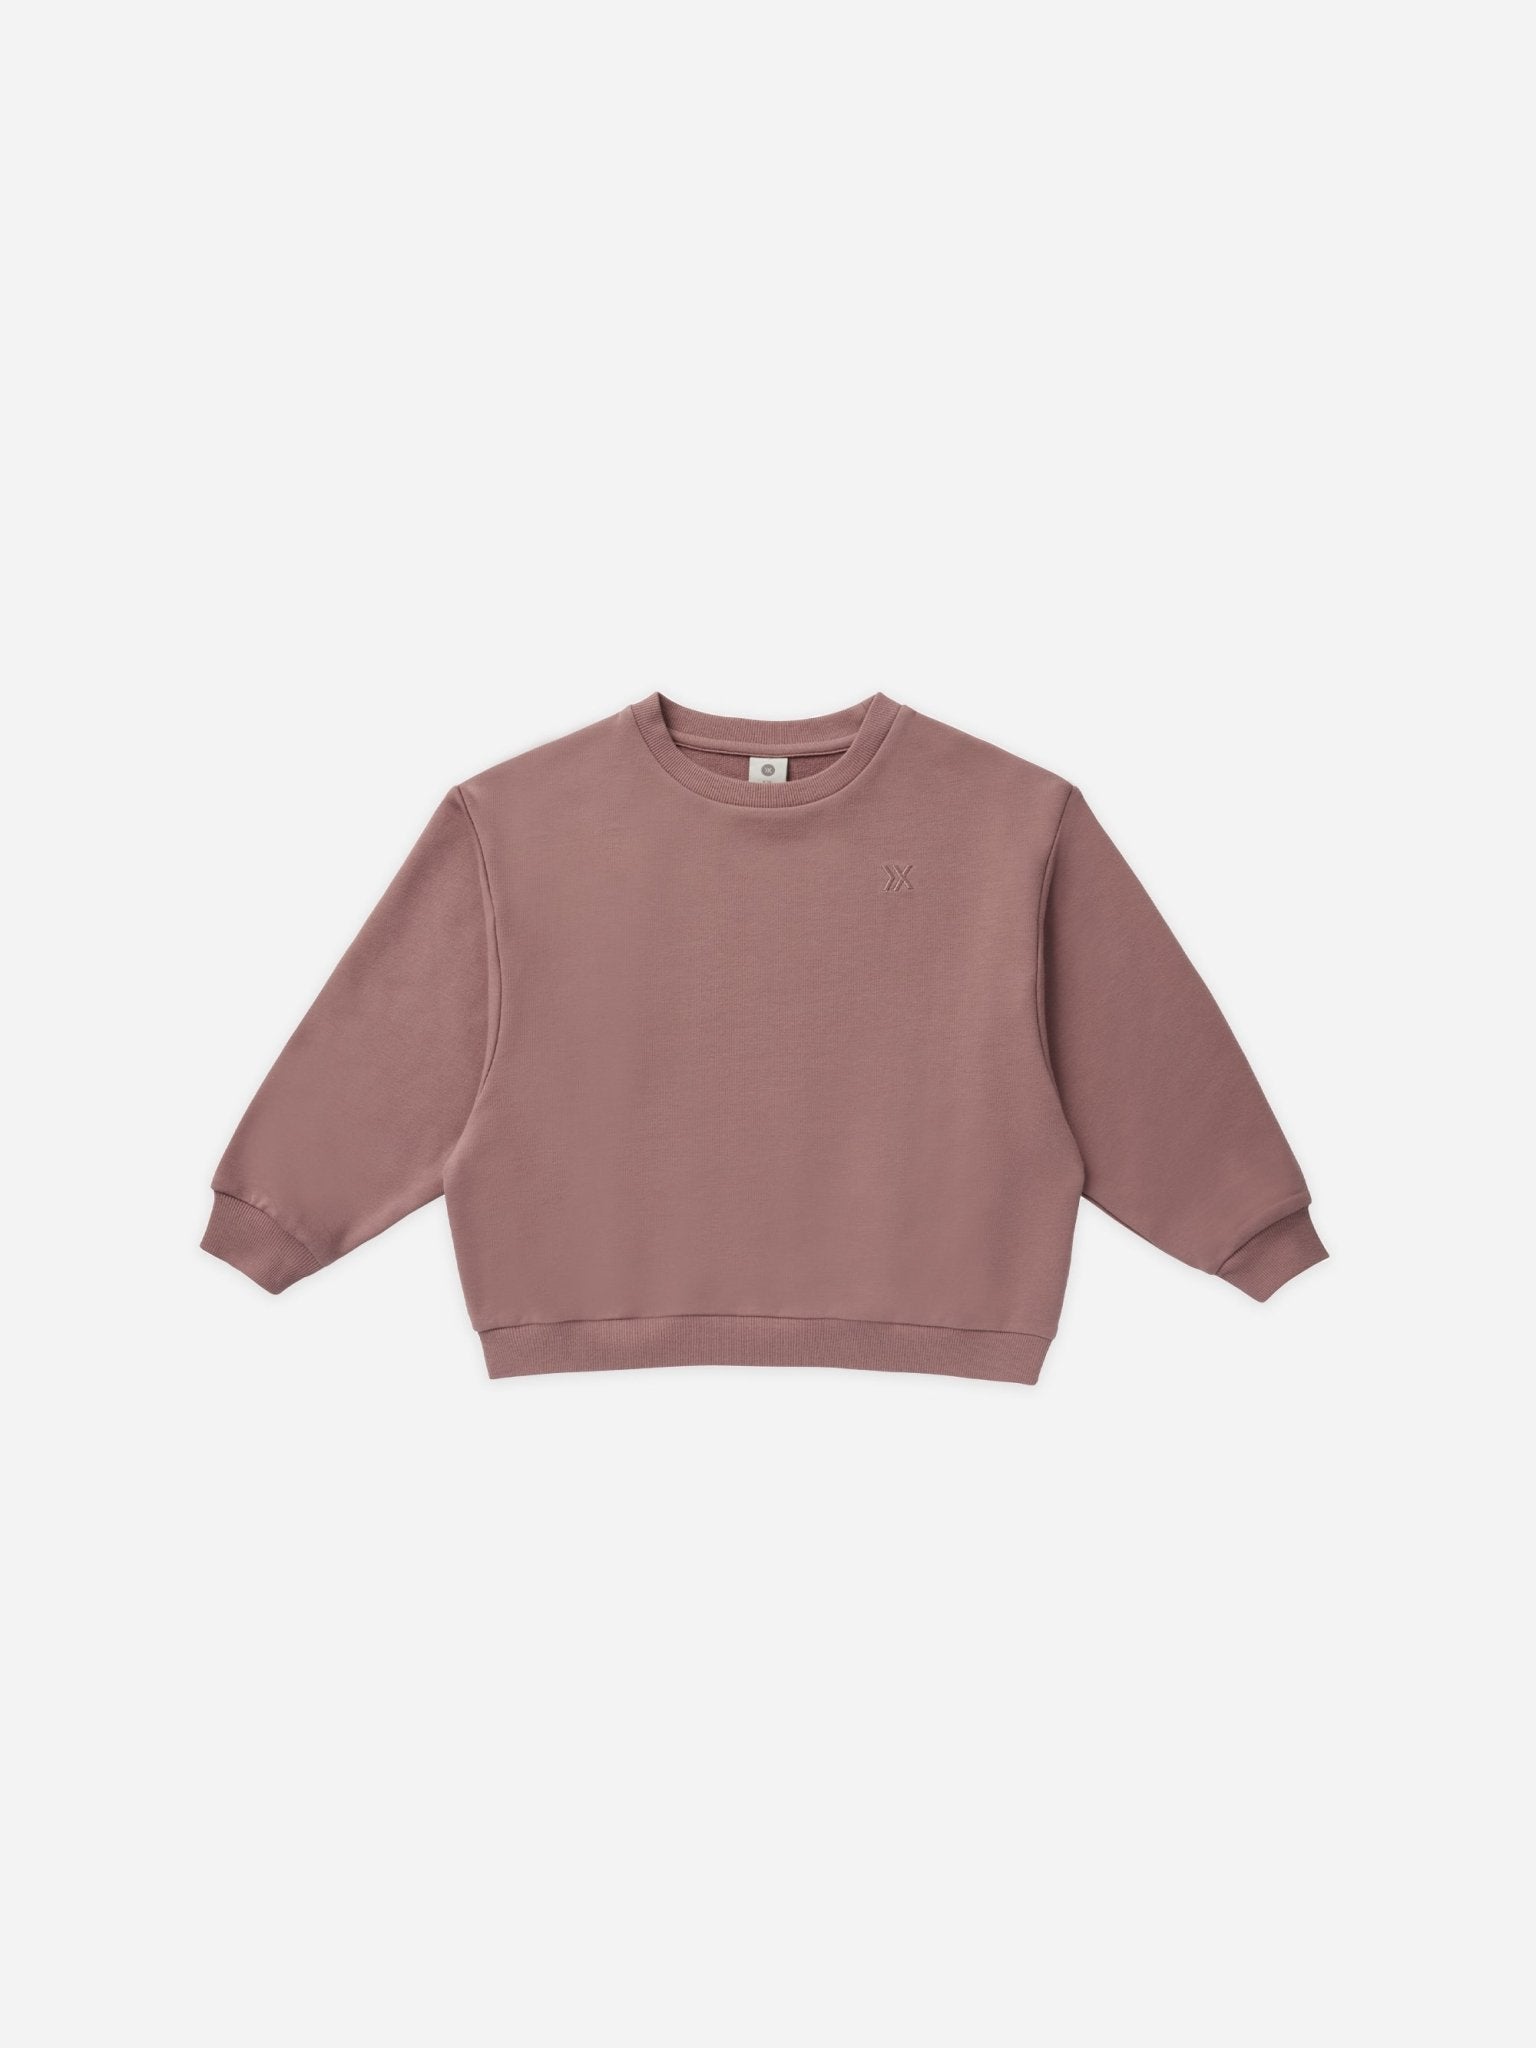 Relaxed Sweatshirt || Mulberry - Rylee + Cru Canada